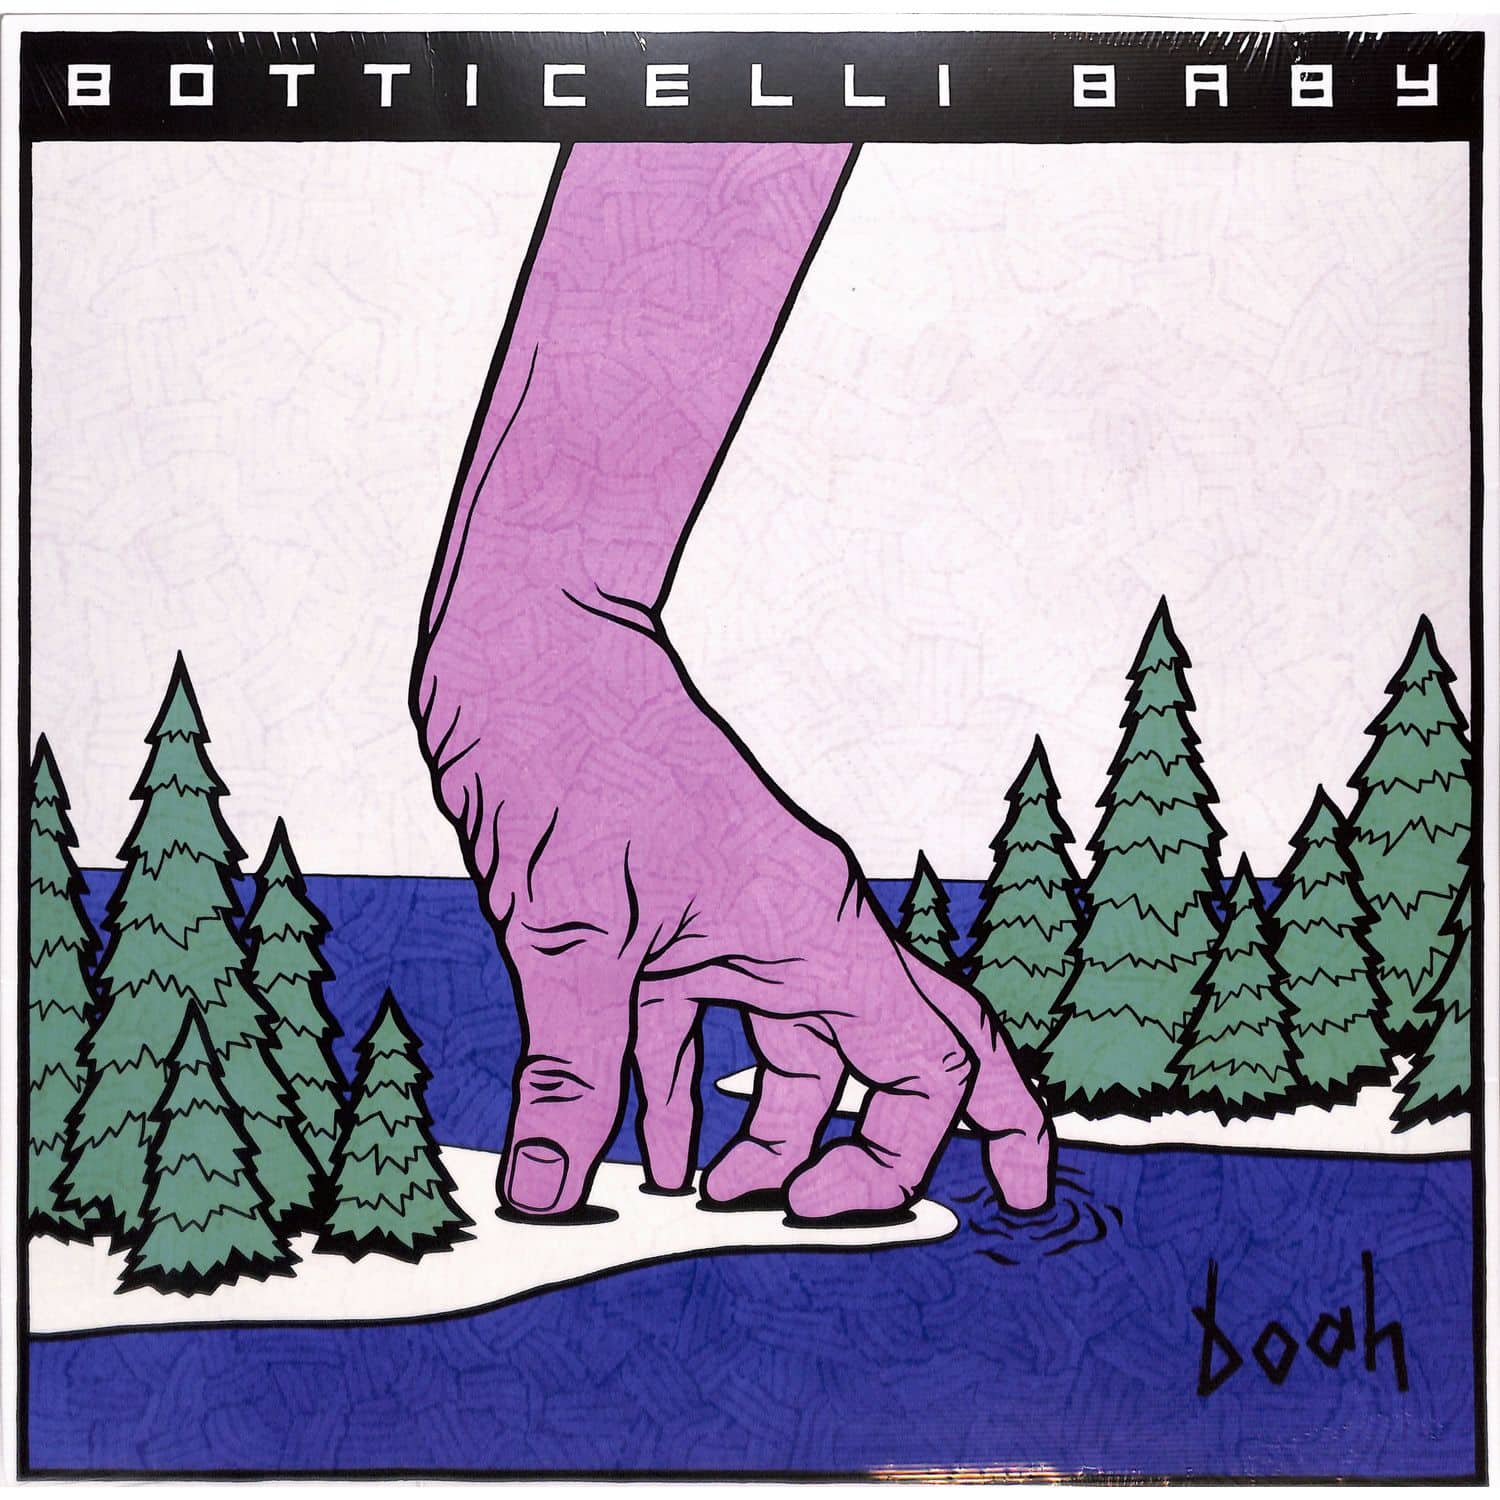 Botticelli Baby - BOAH! 